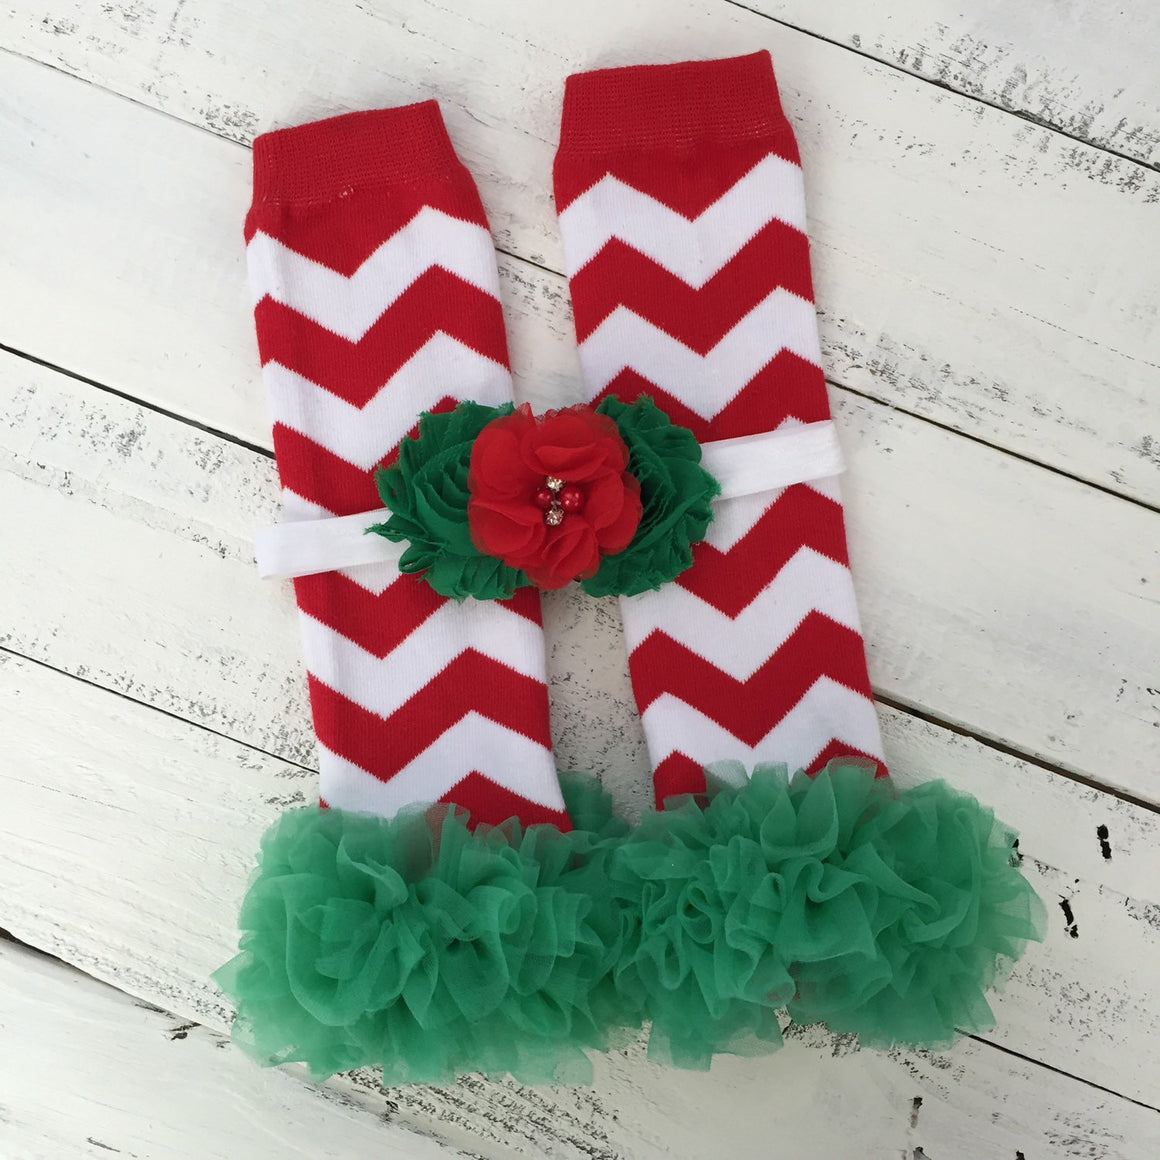 Red/White/Green Chevron leg warmers, matching headband, green ruffle bottom bloomers - HoneyLoveBoutique